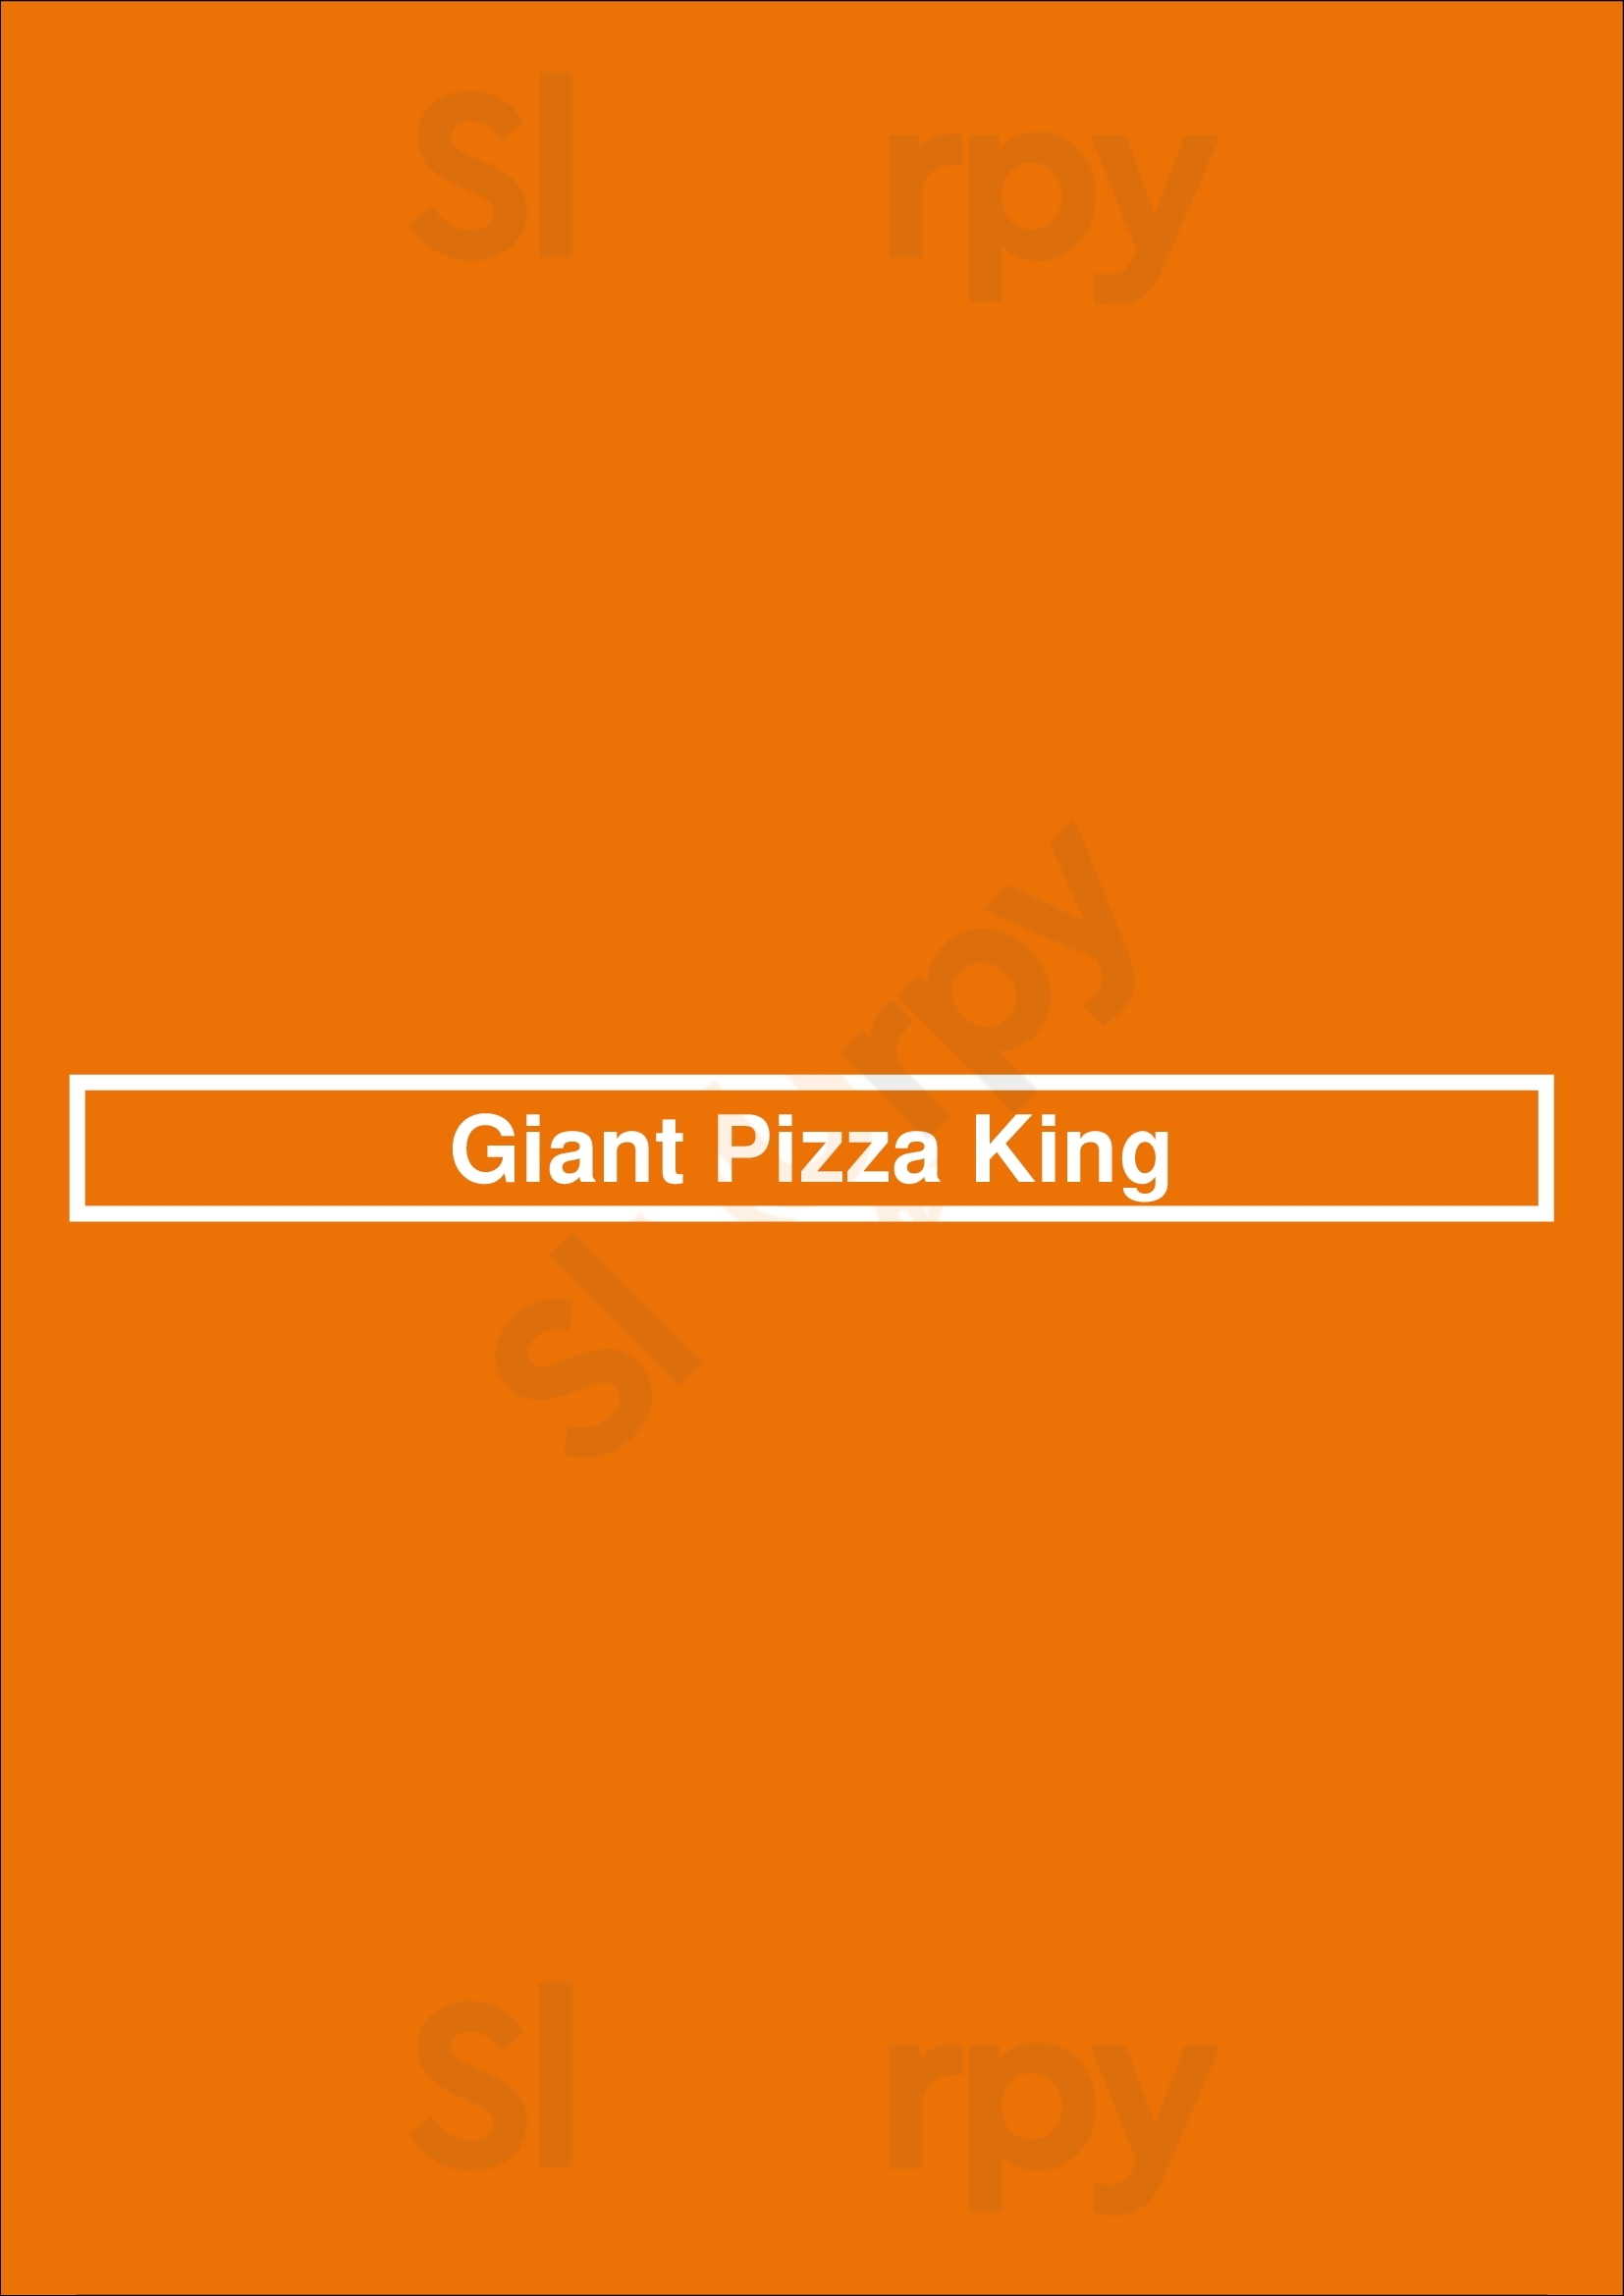 Giant Pizza King San Diego Menu - 1